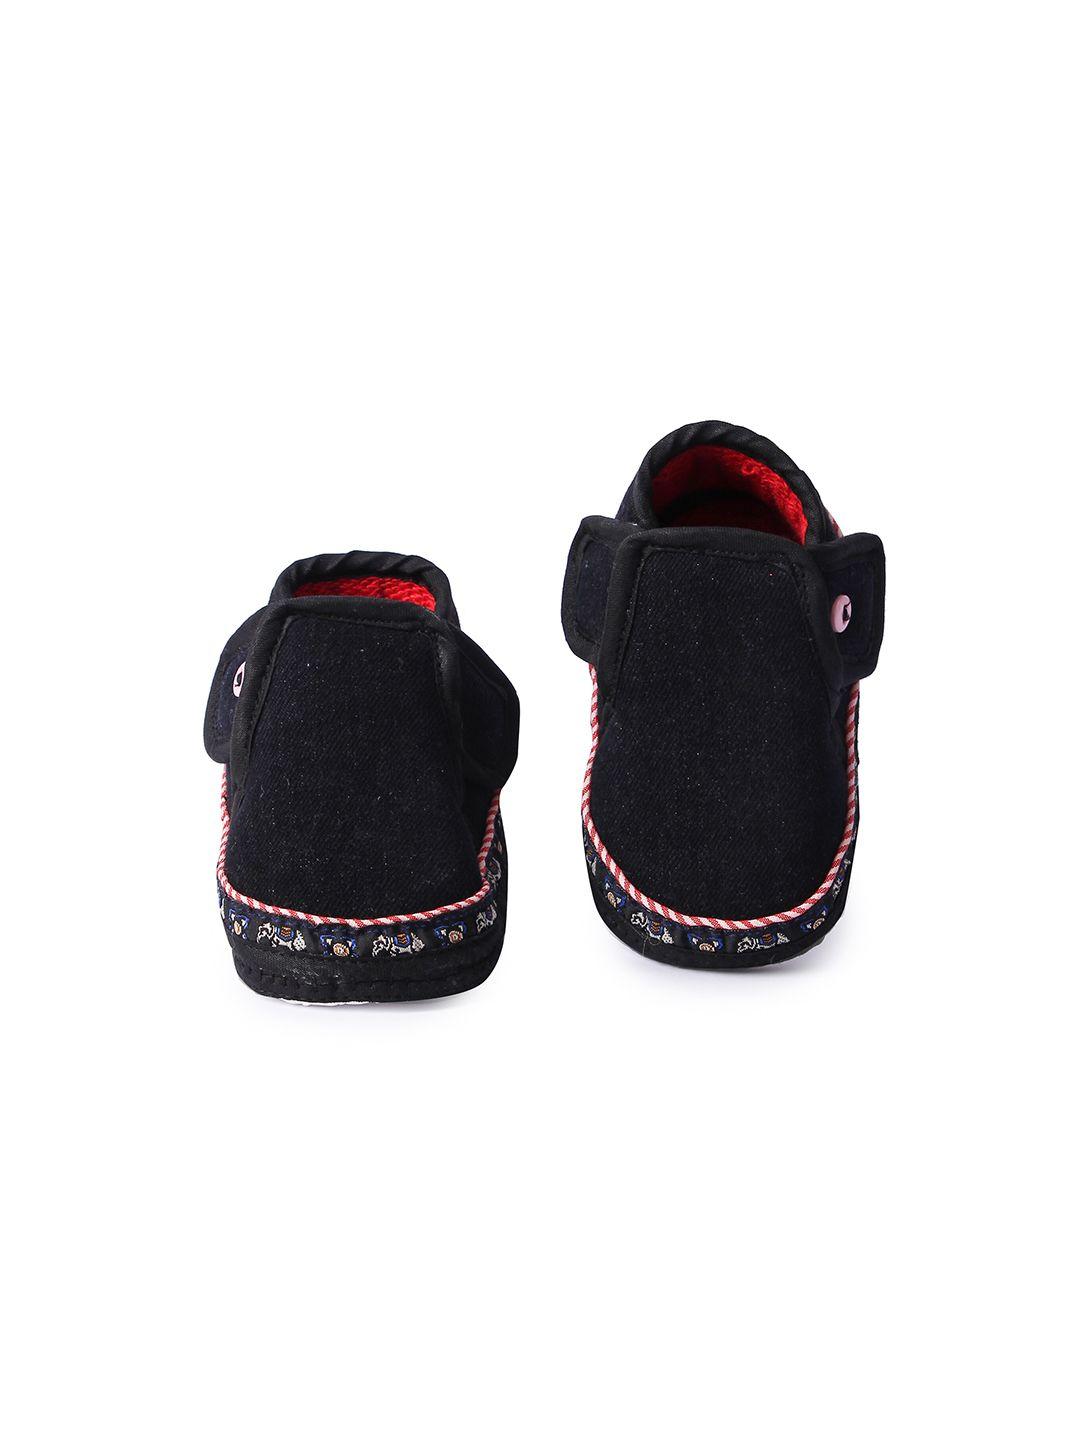 butterthief unisex infant kids black & red shoe-style sandals